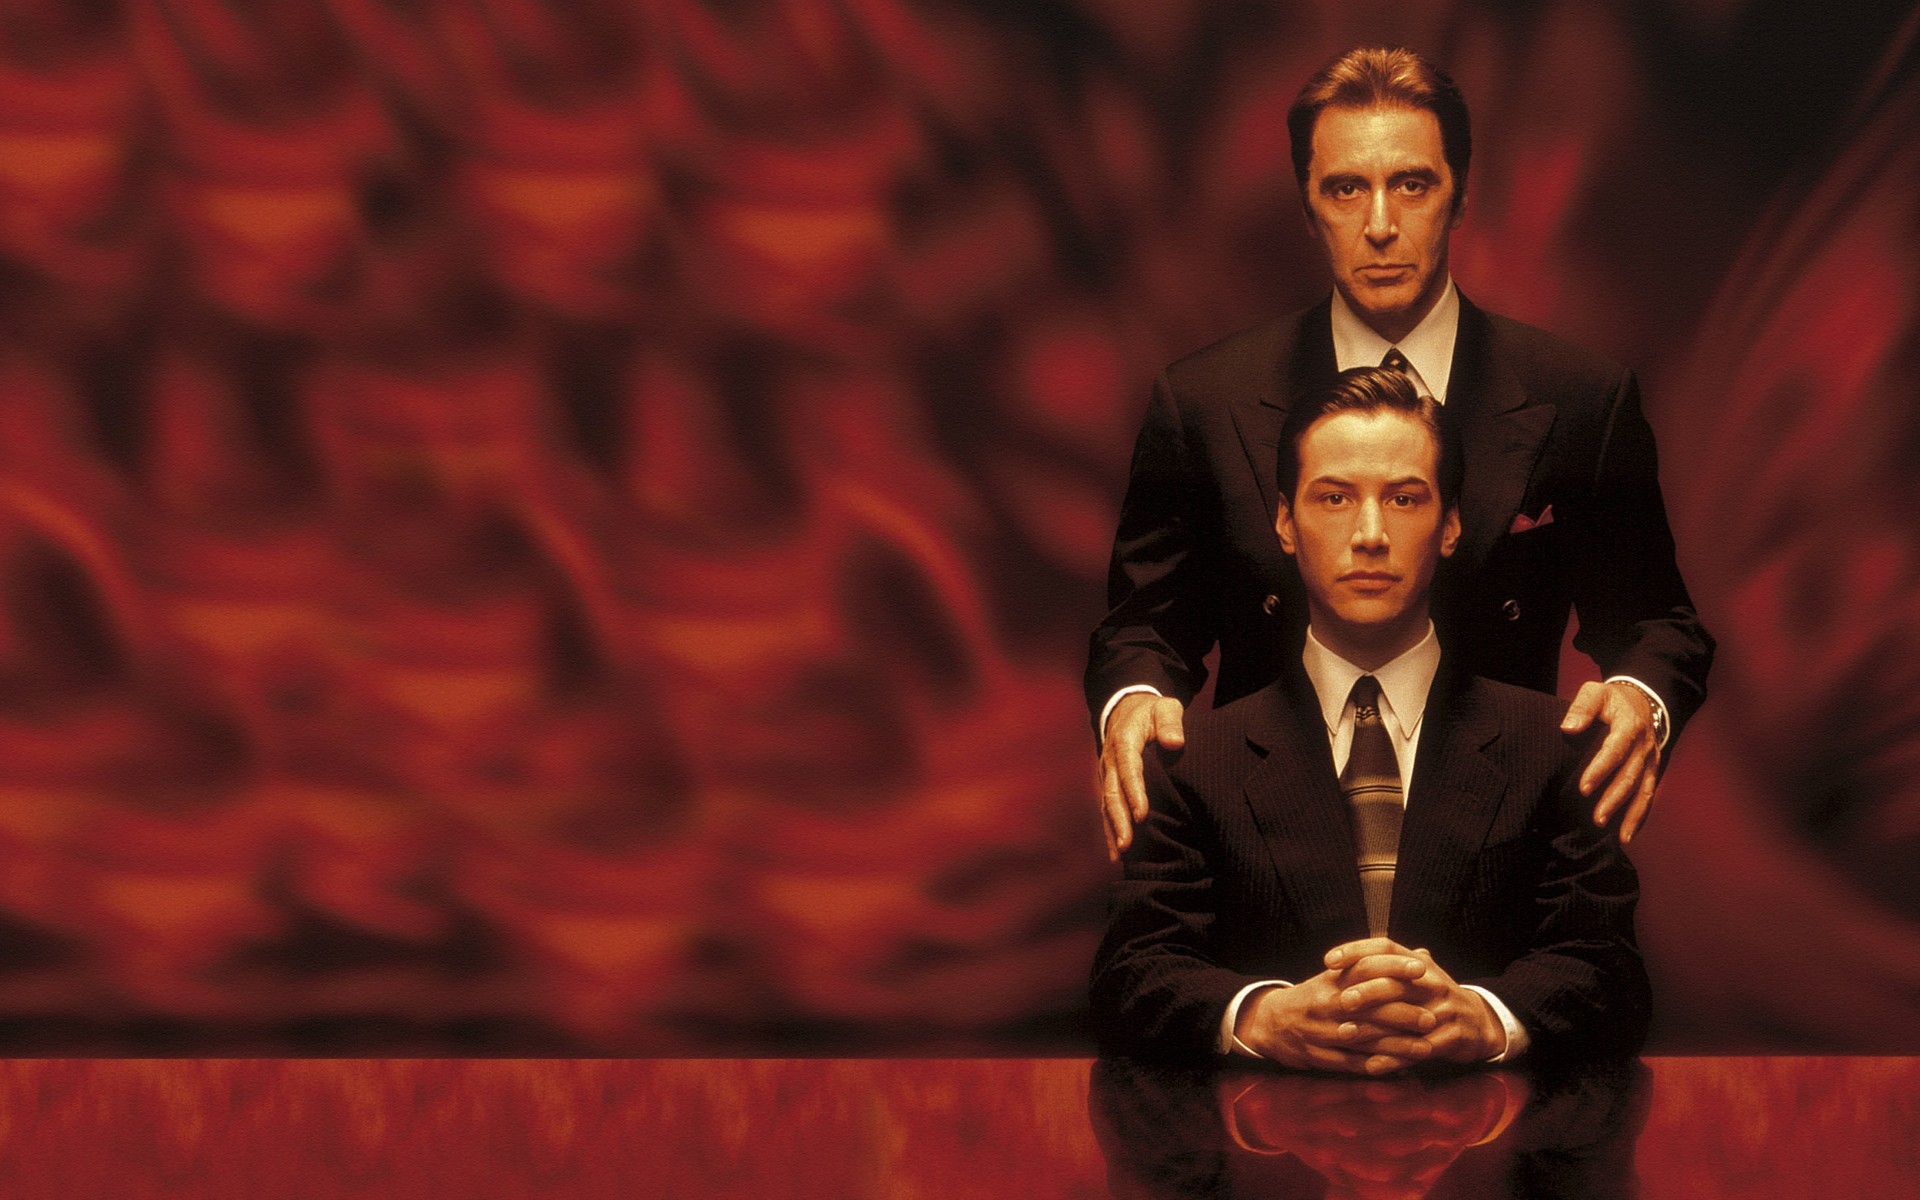 Men Actor Movies Film Stills Suits Tie Al Pacino Keanu Reeves Fire Devil Satan Burning Movie Poster  1920x1200